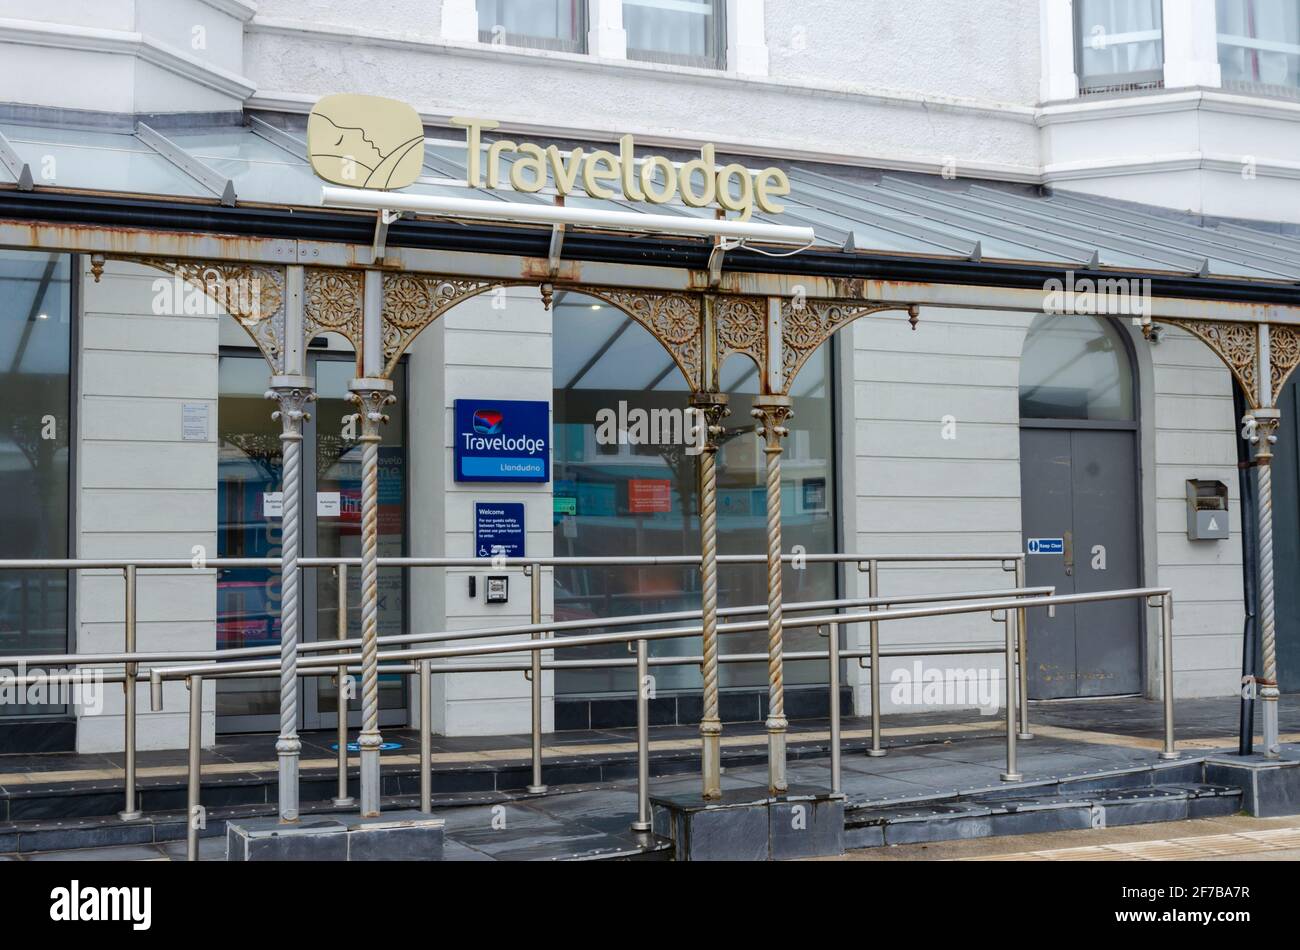 Llandudno, UK: Mar 18, 2021: The Travelodge hotel is located on Gloddaeth Street. Stock Photo